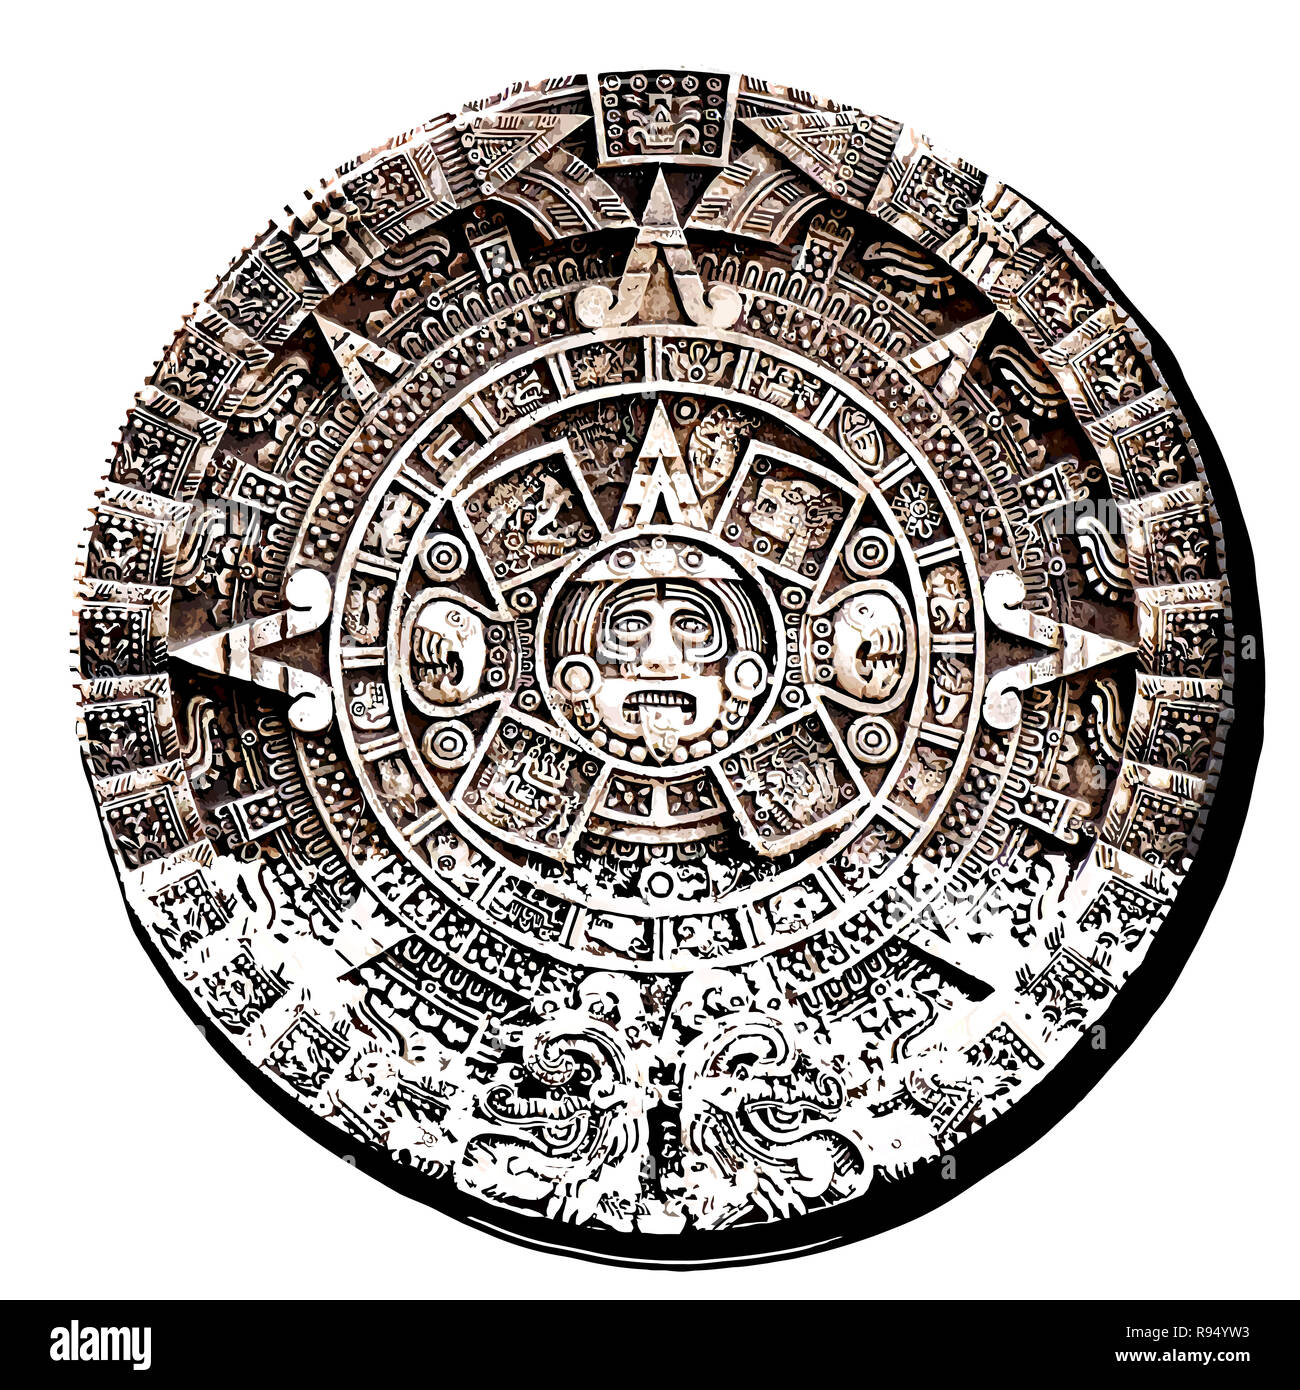 Календарь ма й я пересказ. Календарь Майя вектор. Ацтекский календарь астрономия. Календарь ацтеков вектор. Конец календаря Майя.